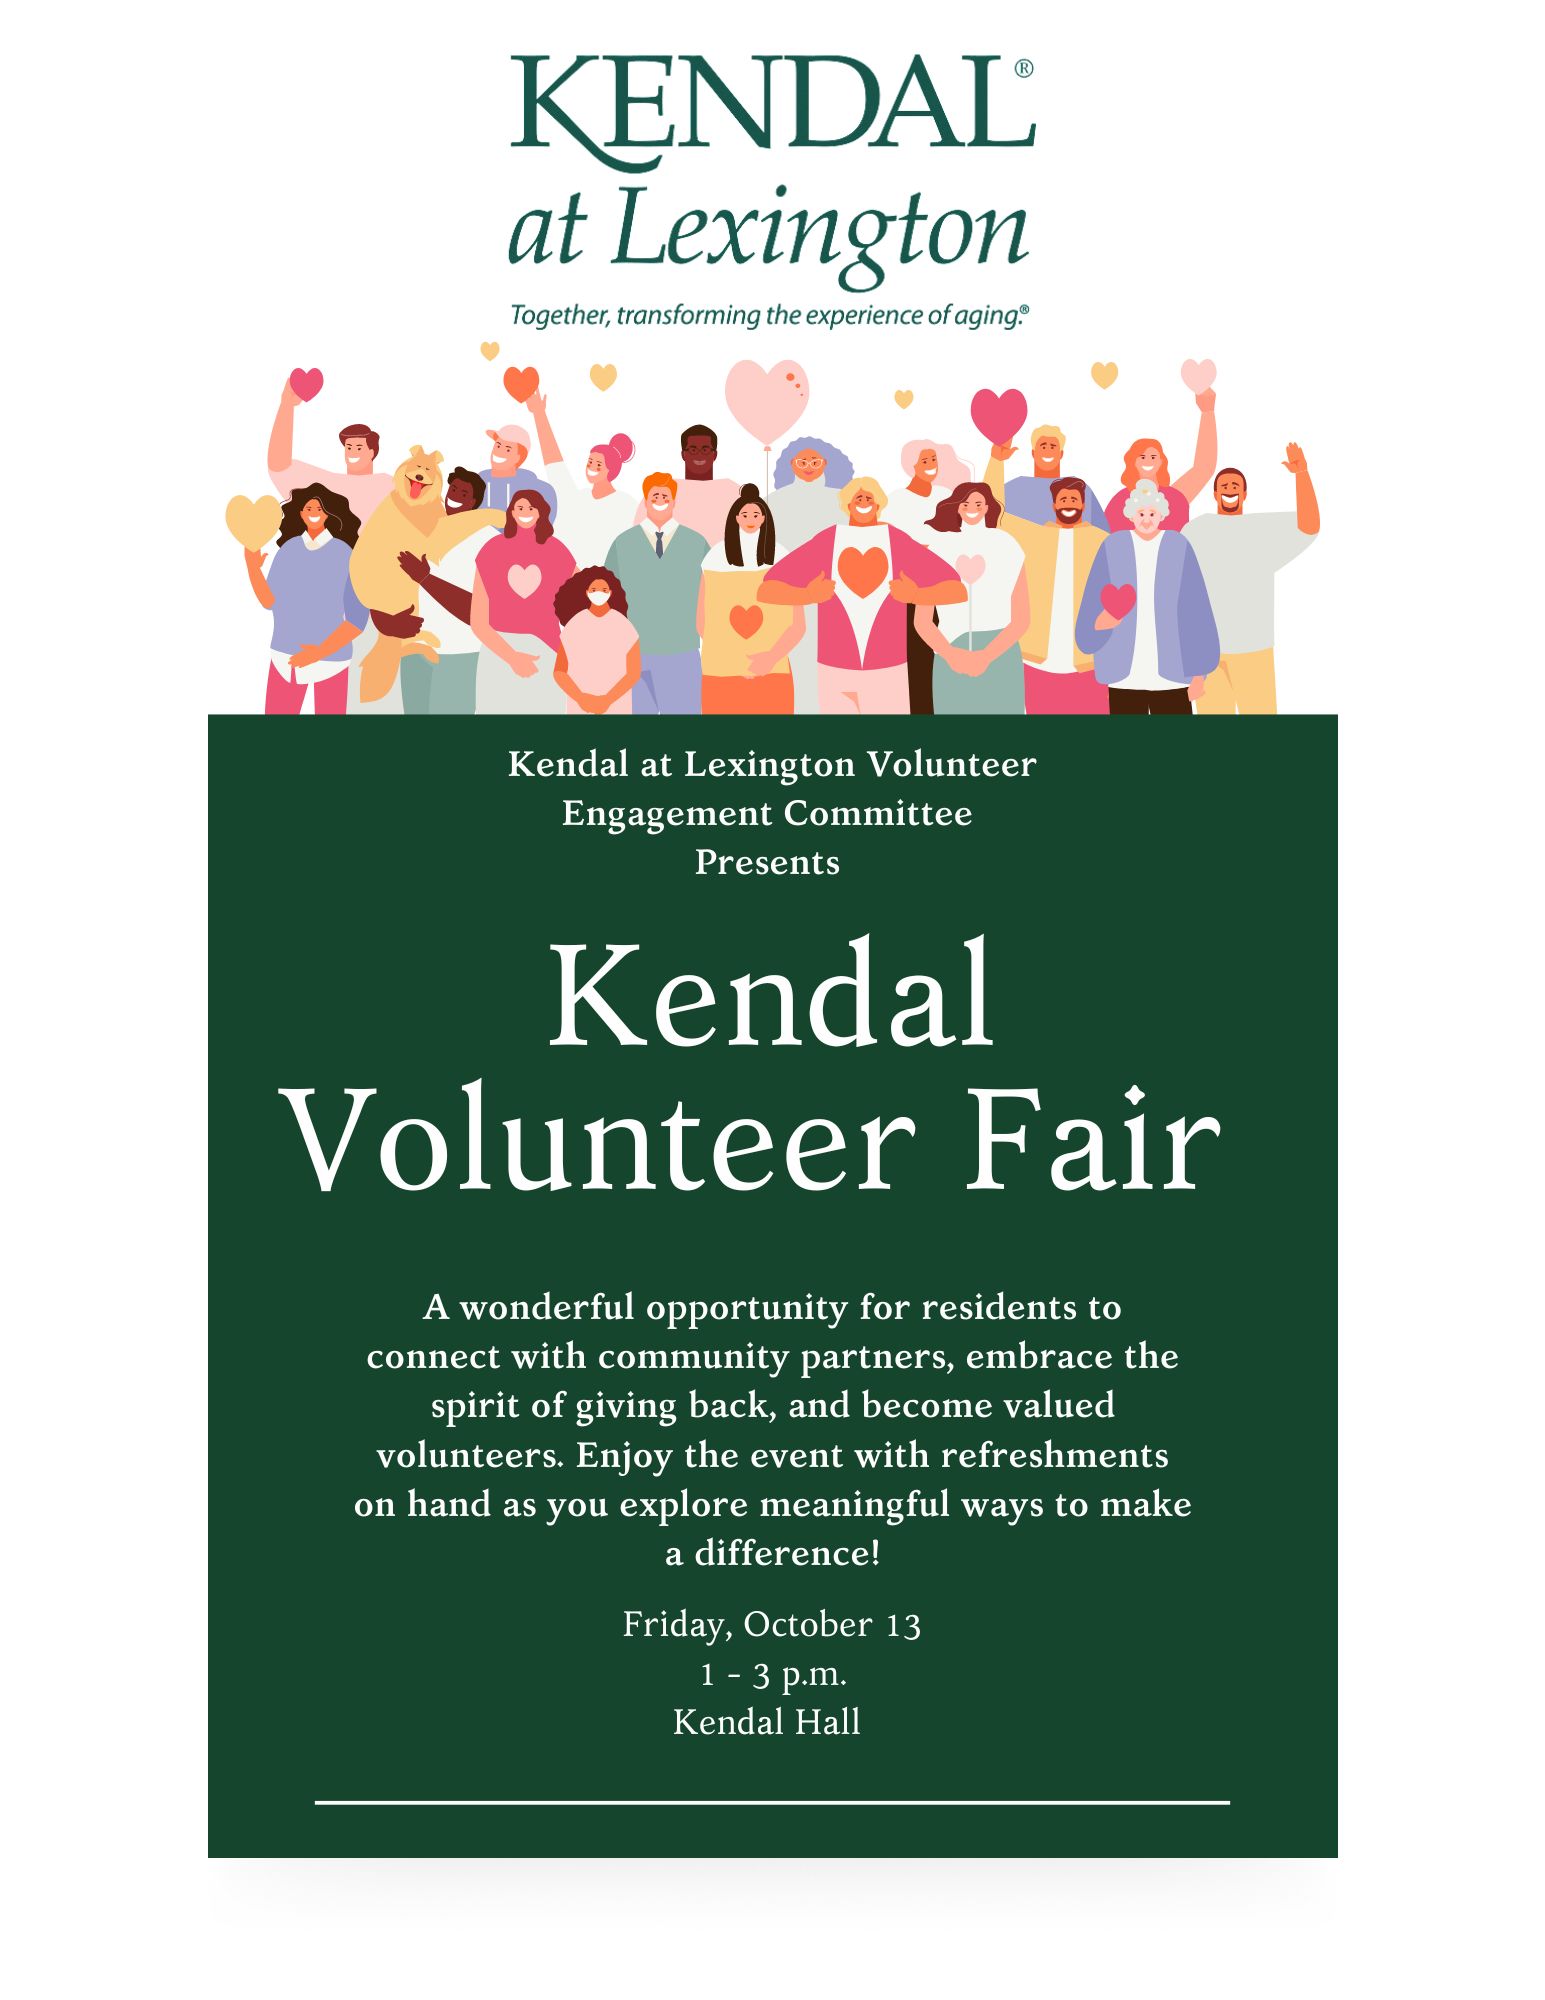 Kendal at Lexington volunteer fair flier.